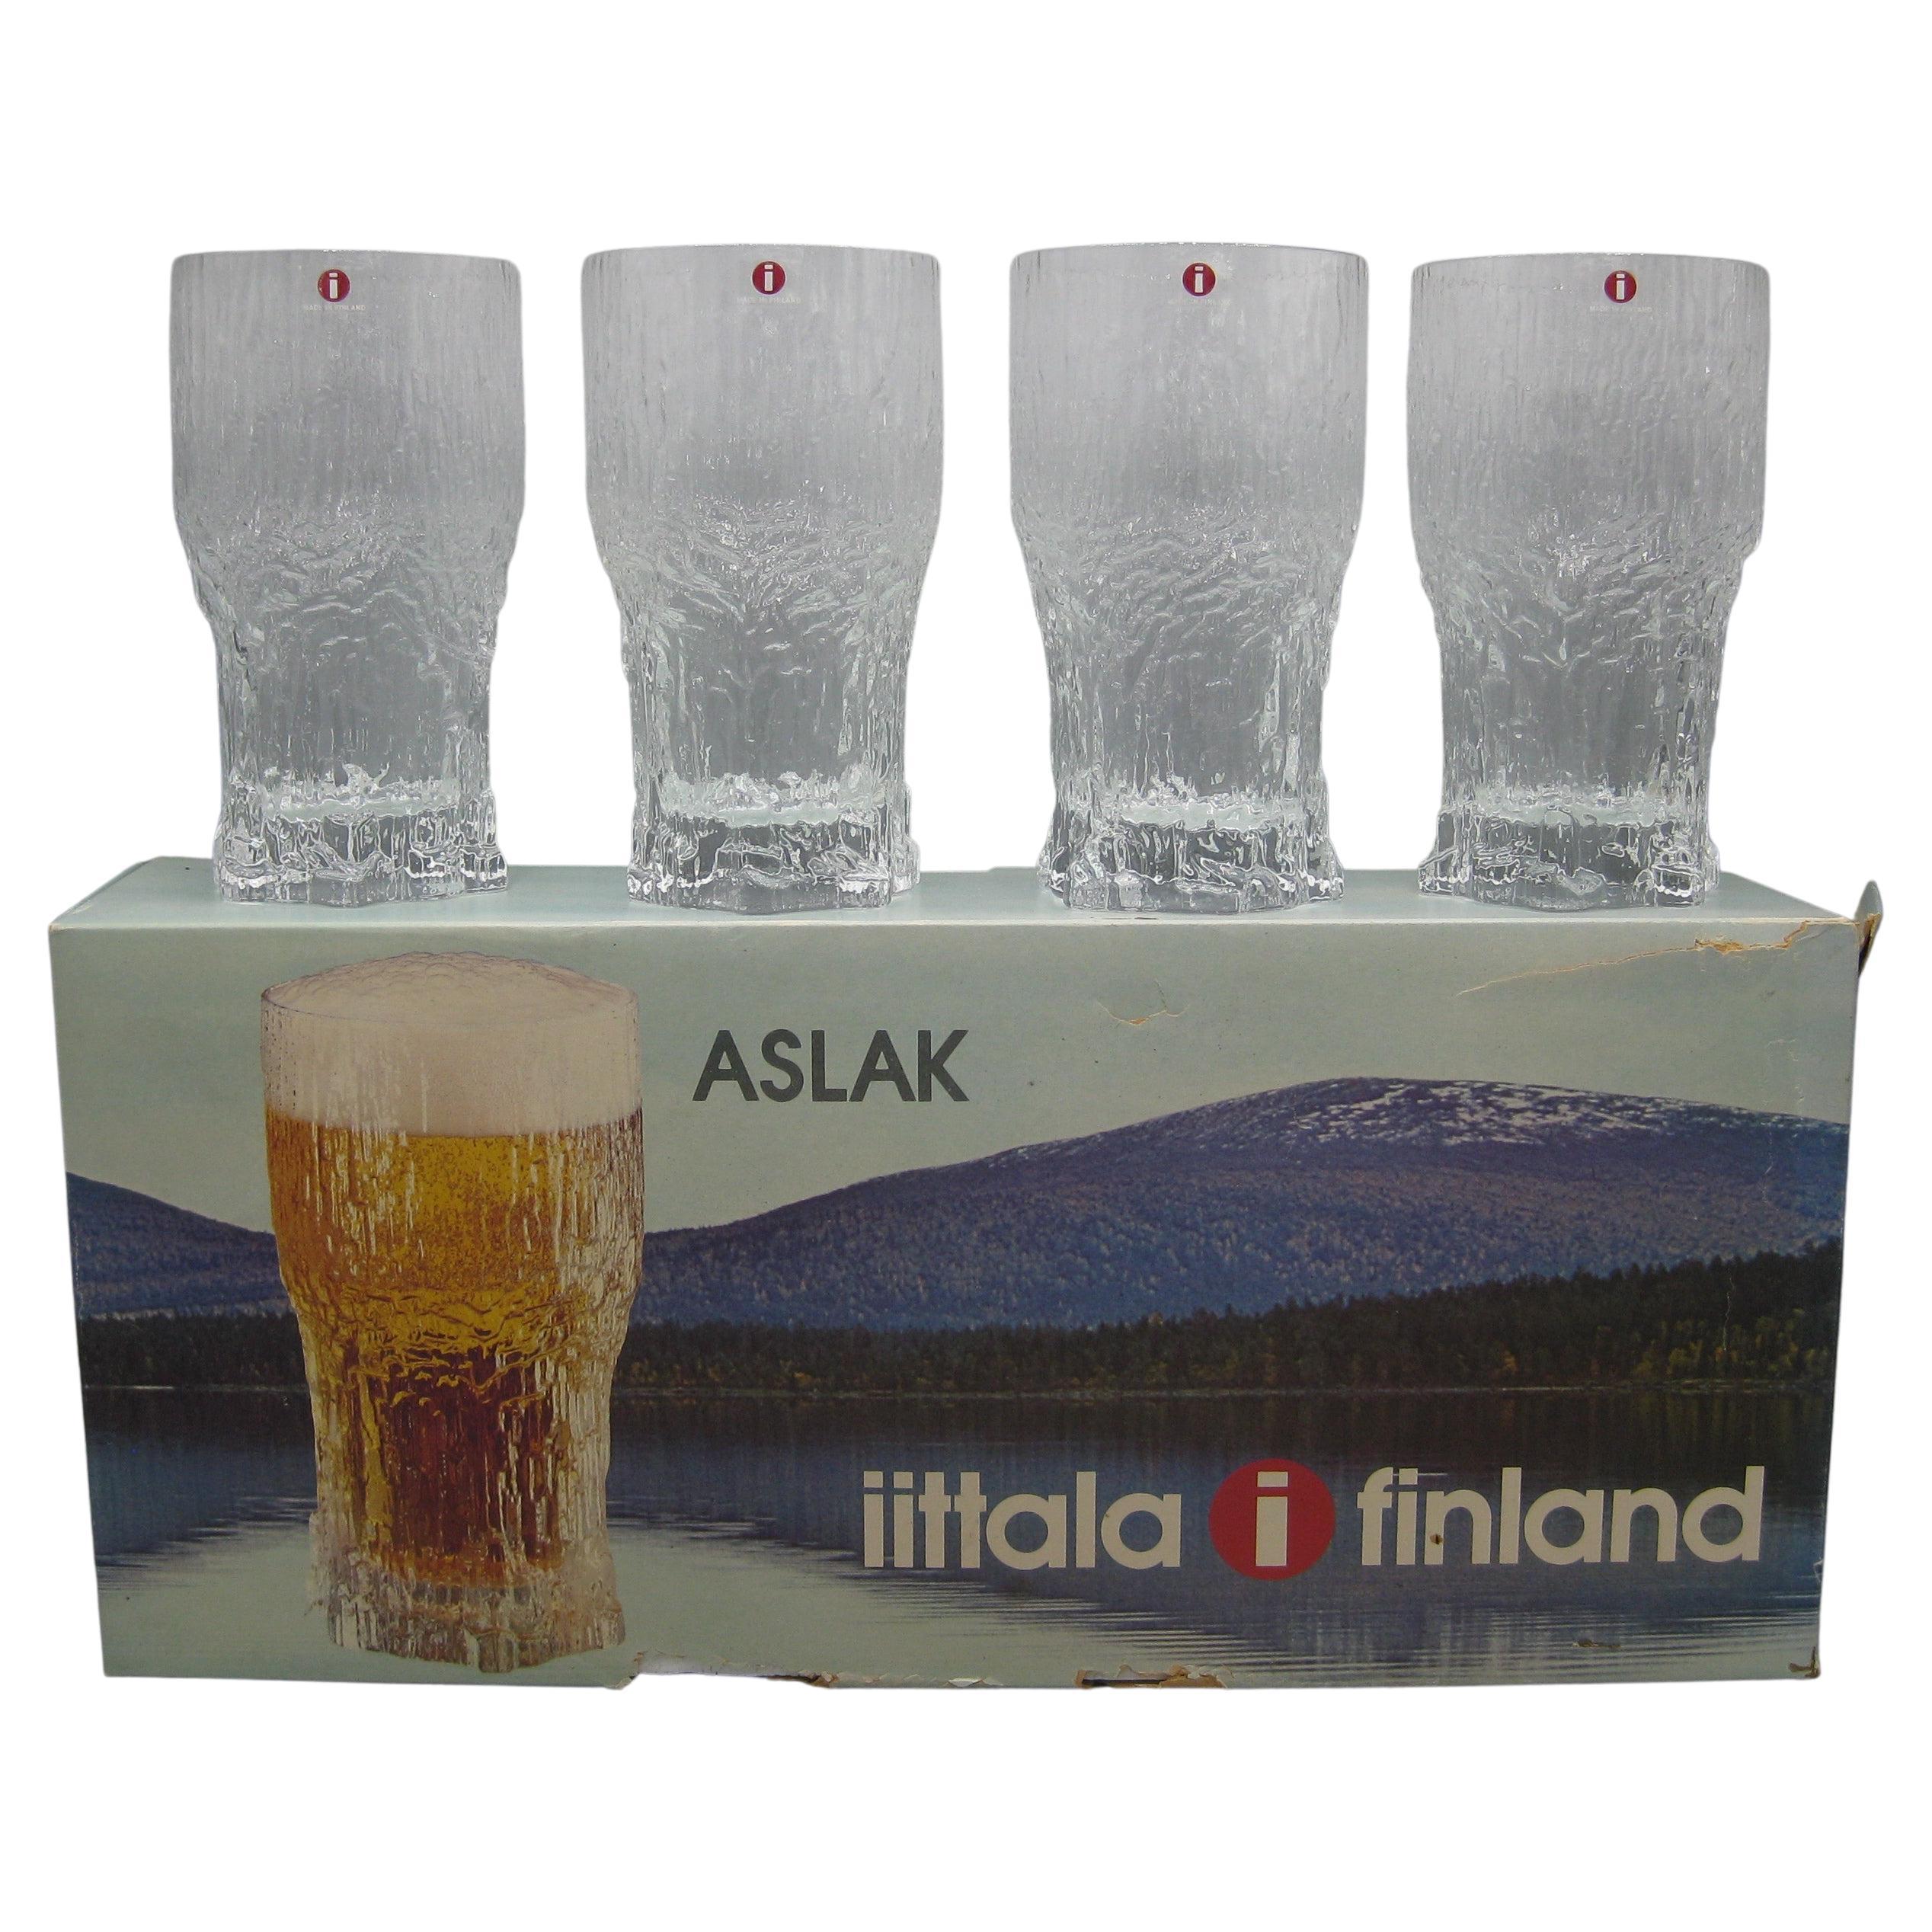 4 Iittala of Finland Aslak Tapio Wirkkala Beer Glasses New in Box 60's VW Promo